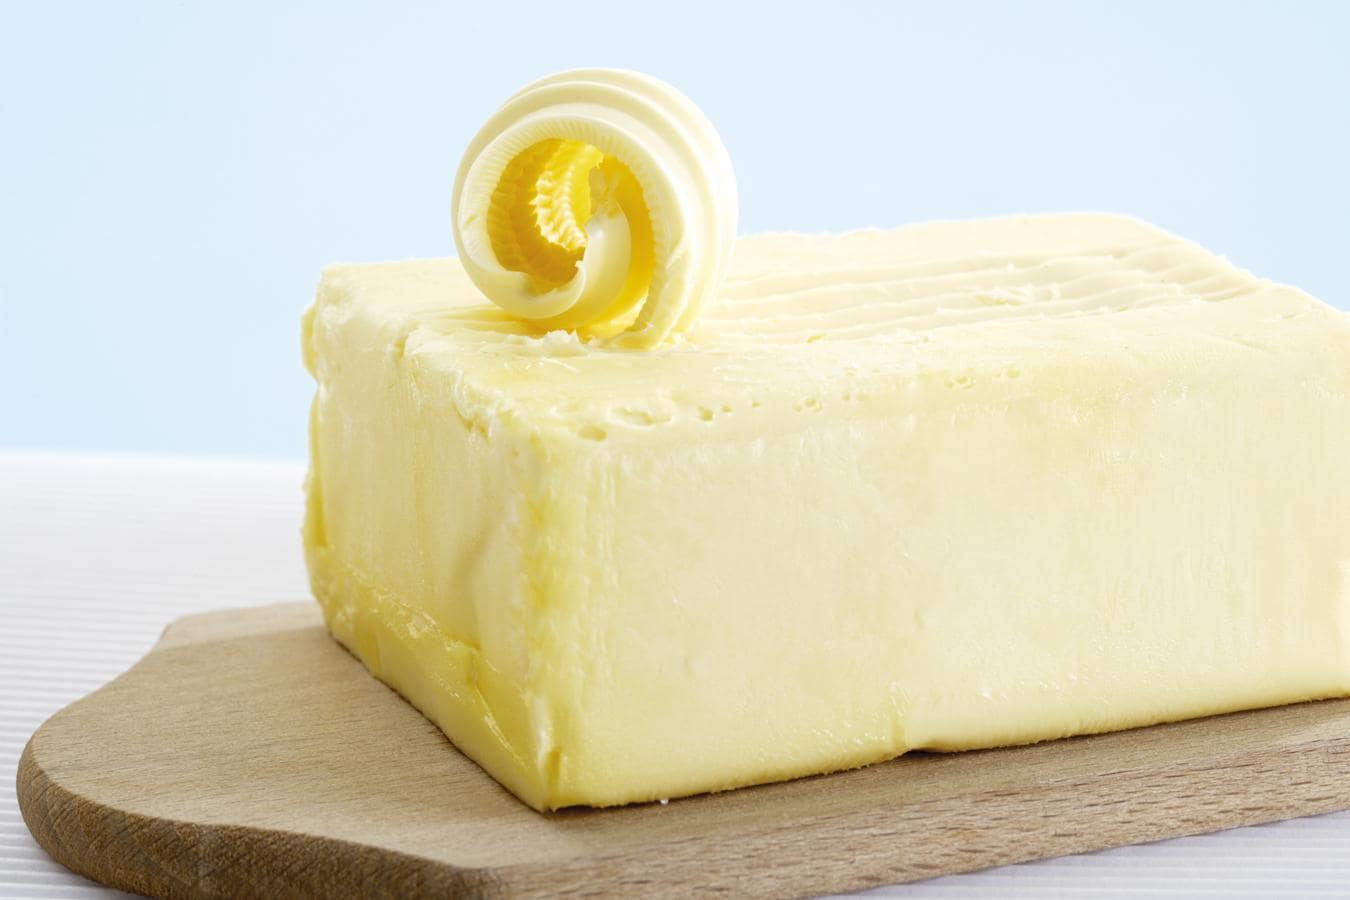 Mantequilla y Margarina